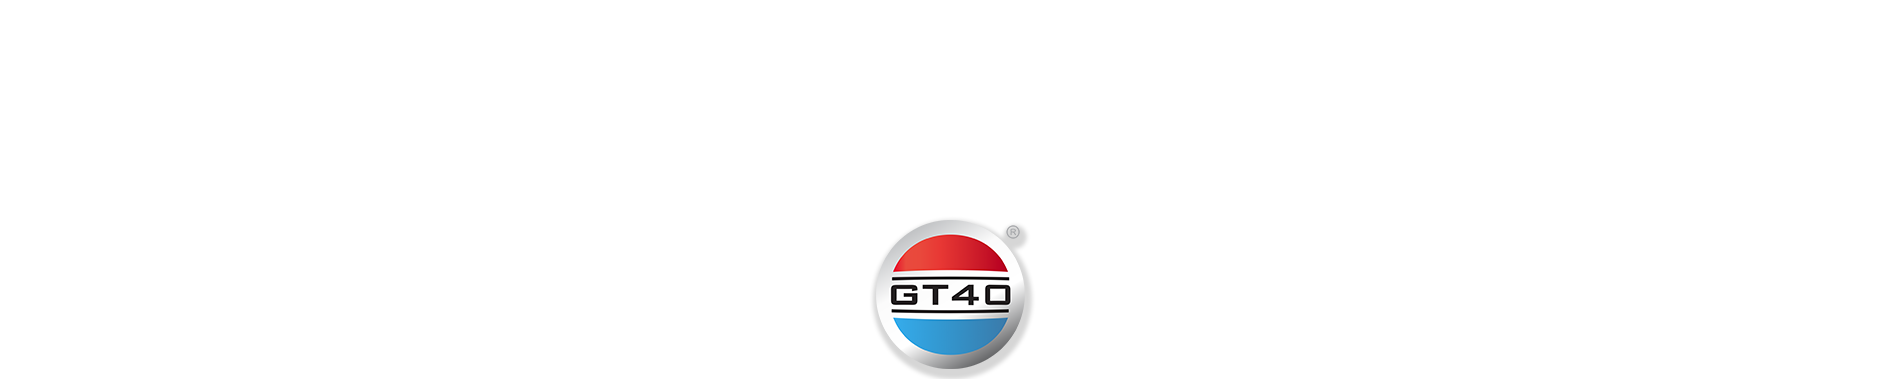 GT40 certification